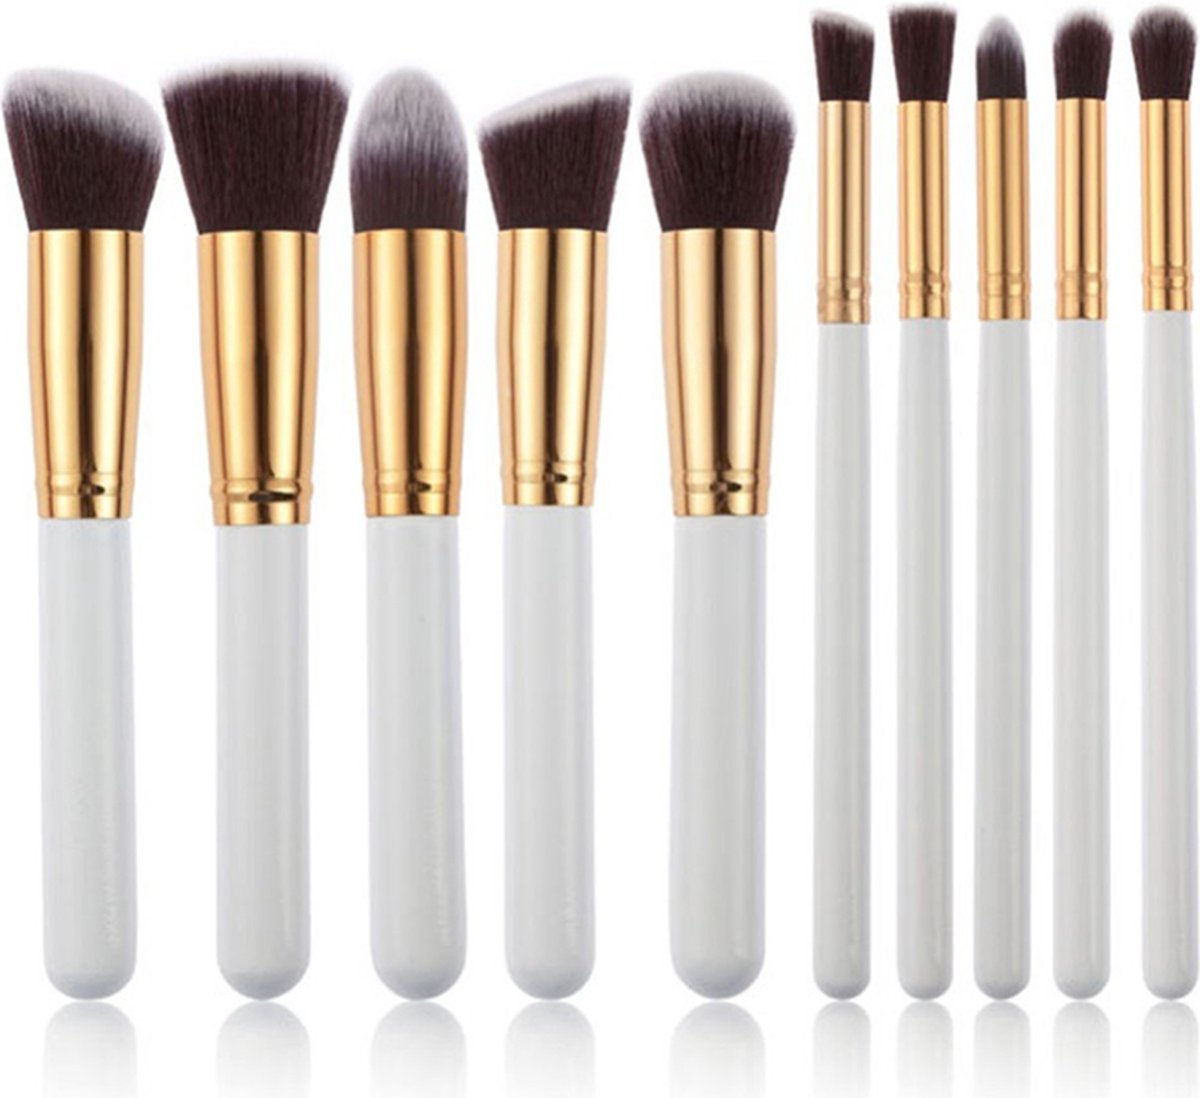 Technique Pro 10-delige Make-up Kwastensets - Make Up Brush - Oogschaduw – Beauty - Foundation Kwast - Poederkwast - Brush - Make Up - Cosmetica - White/Gold